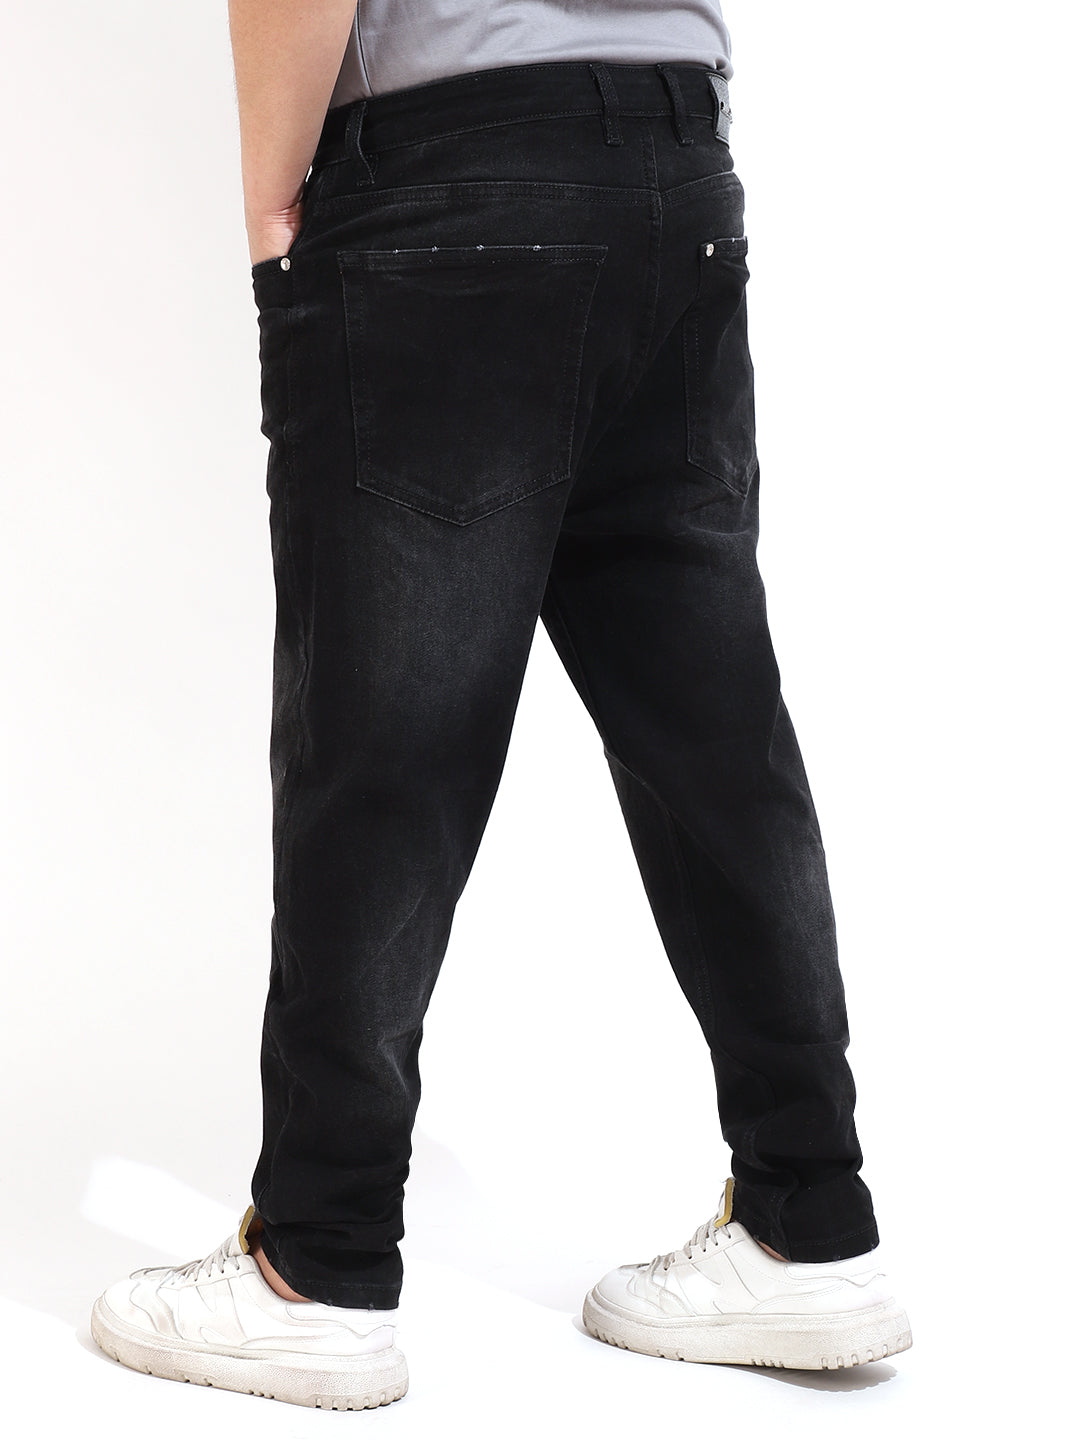 Black Denim Fabric Jeans